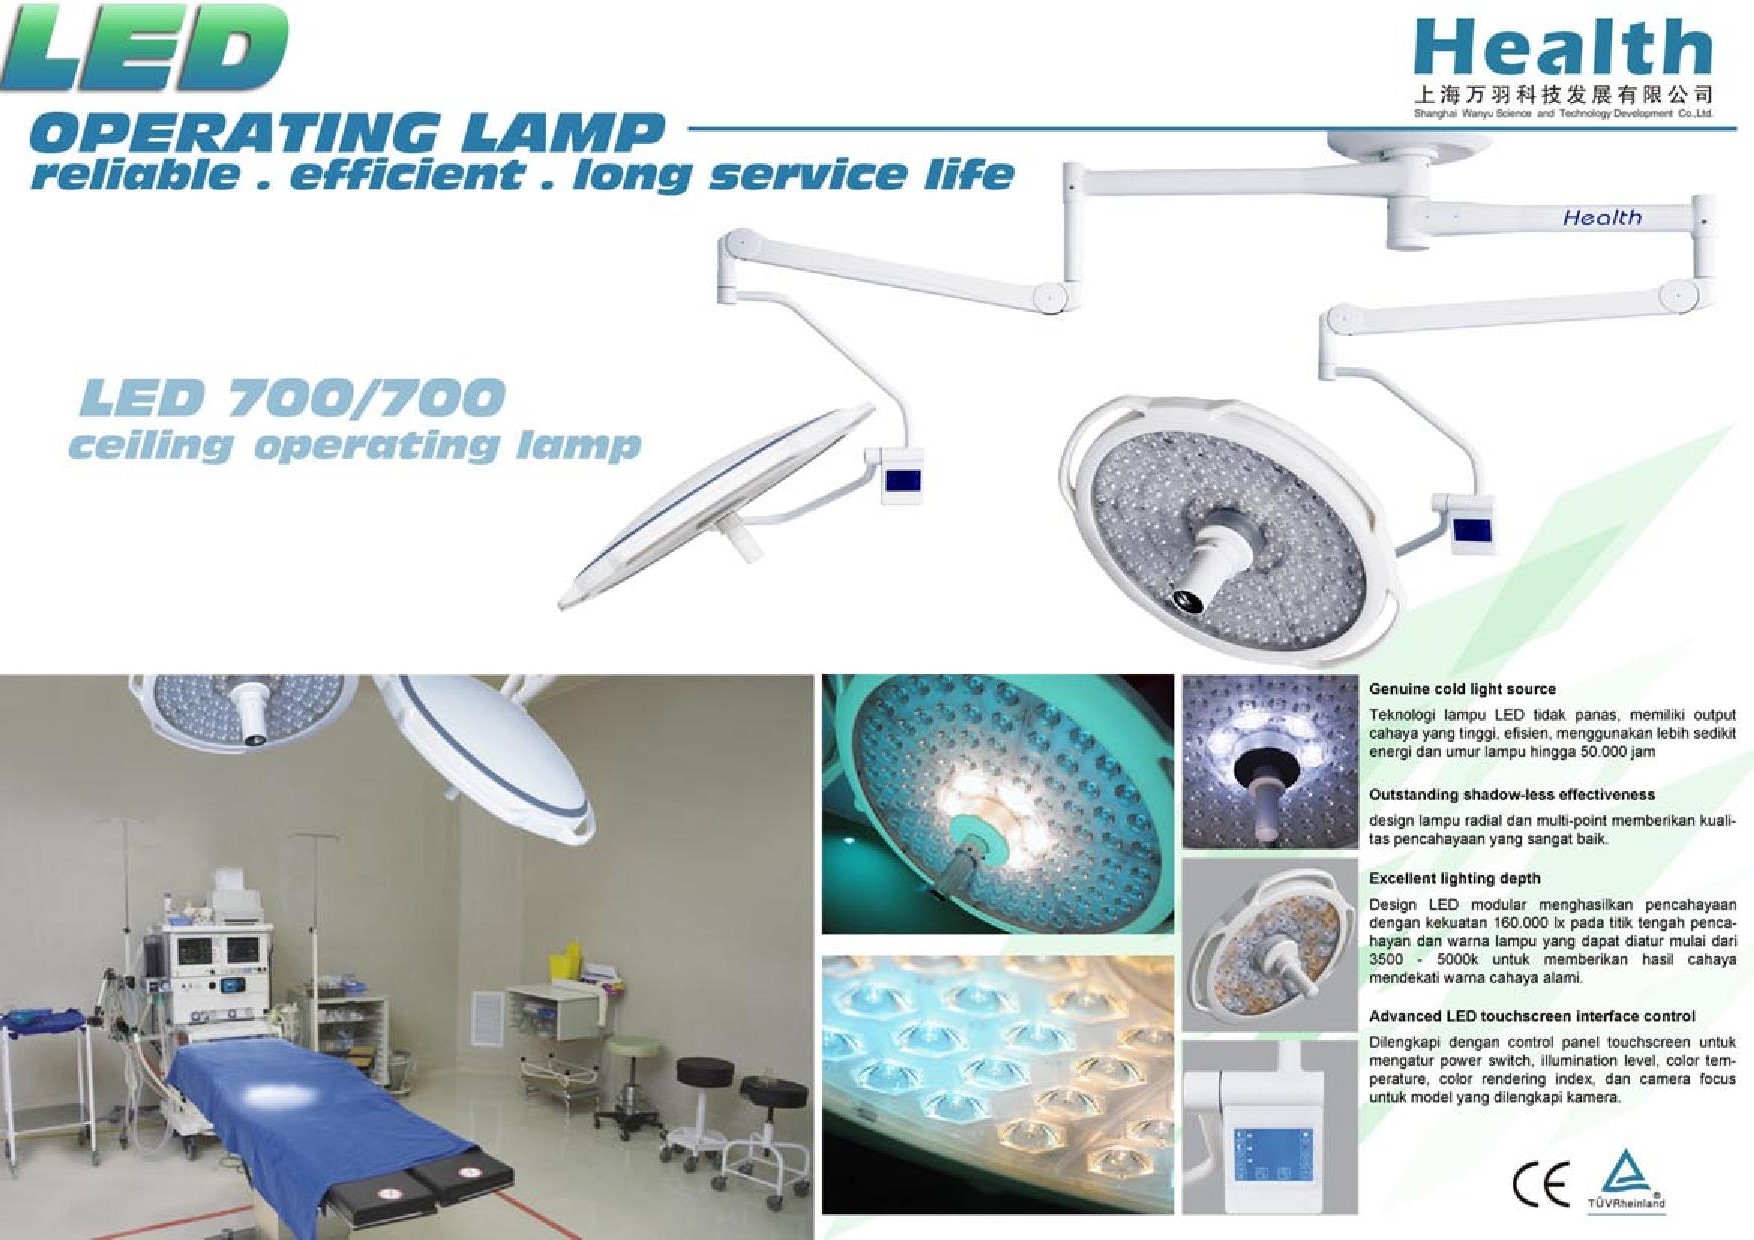 Health Operating Lamp LED 700/700